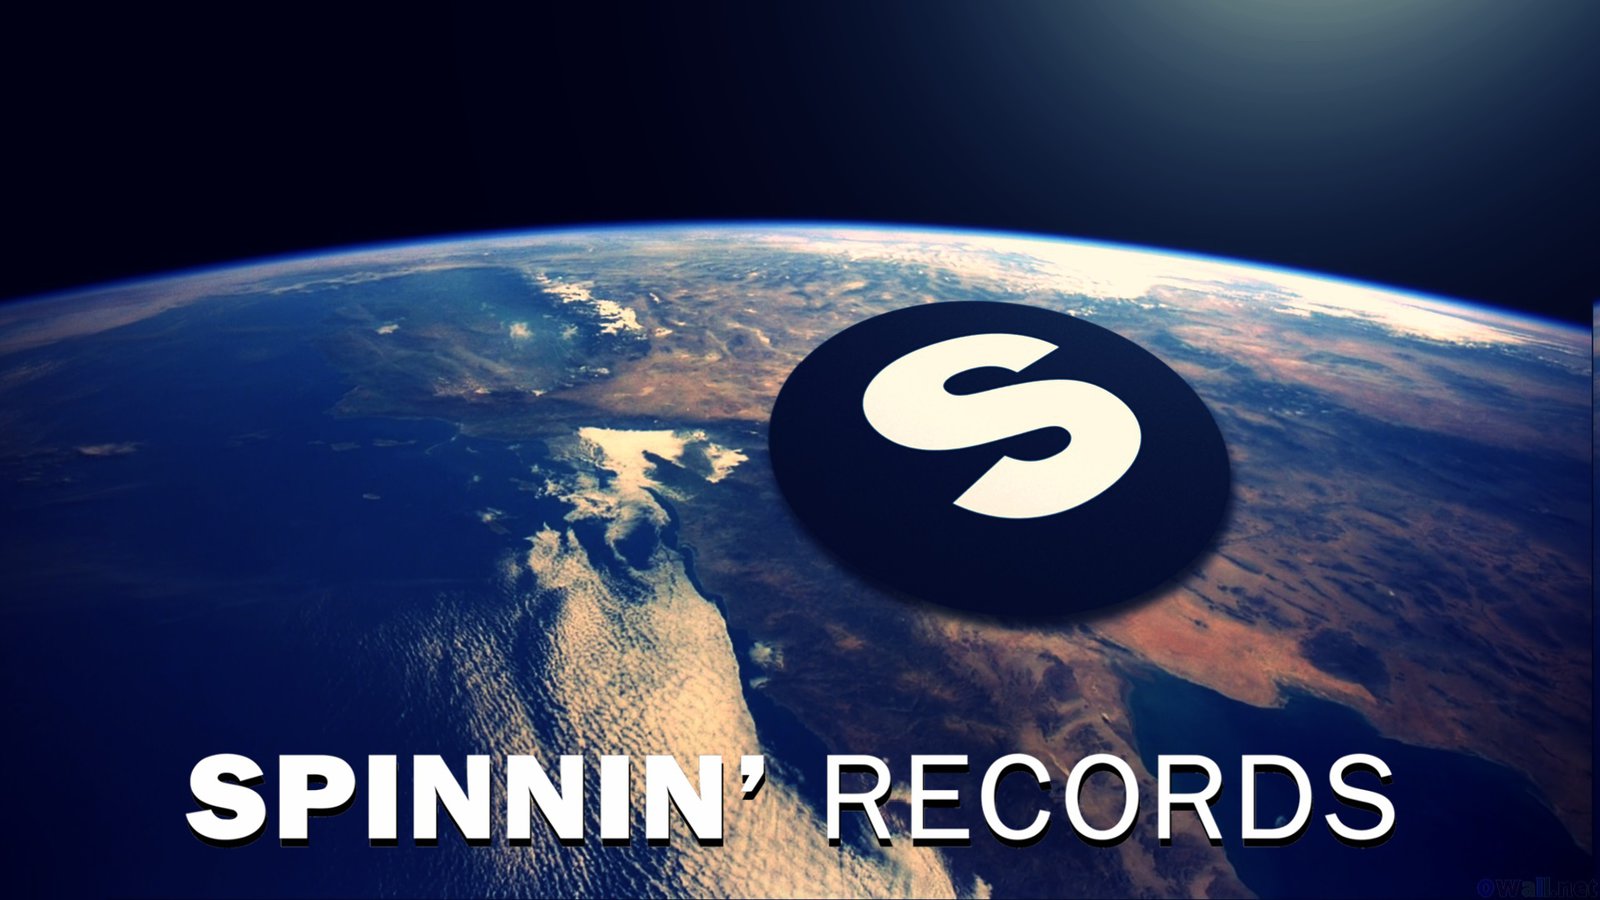 Spinnin Records llega a los 10M en Youtube | Wololo Sound